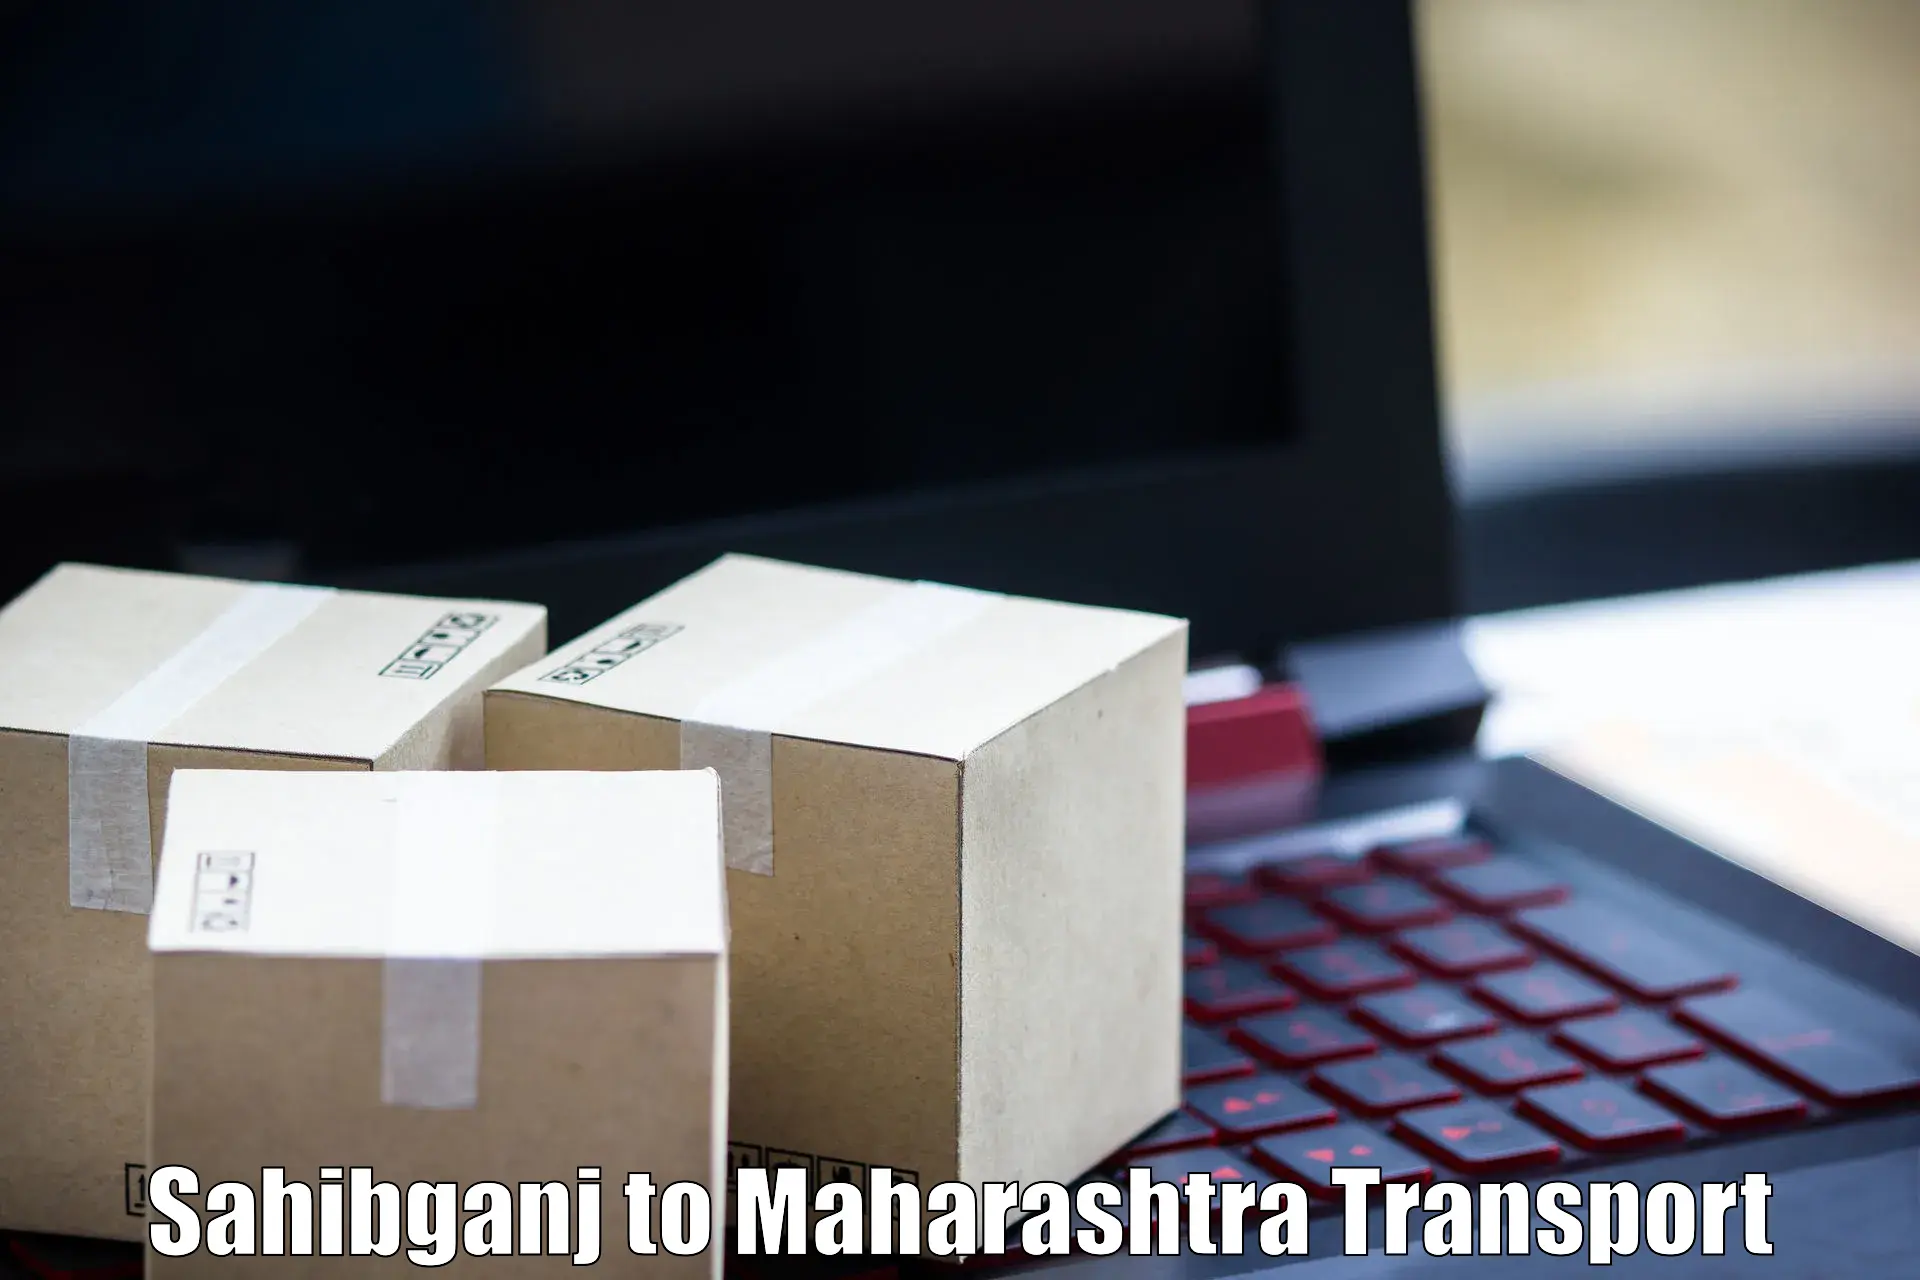 Online transport service Sahibganj to Nandurbar